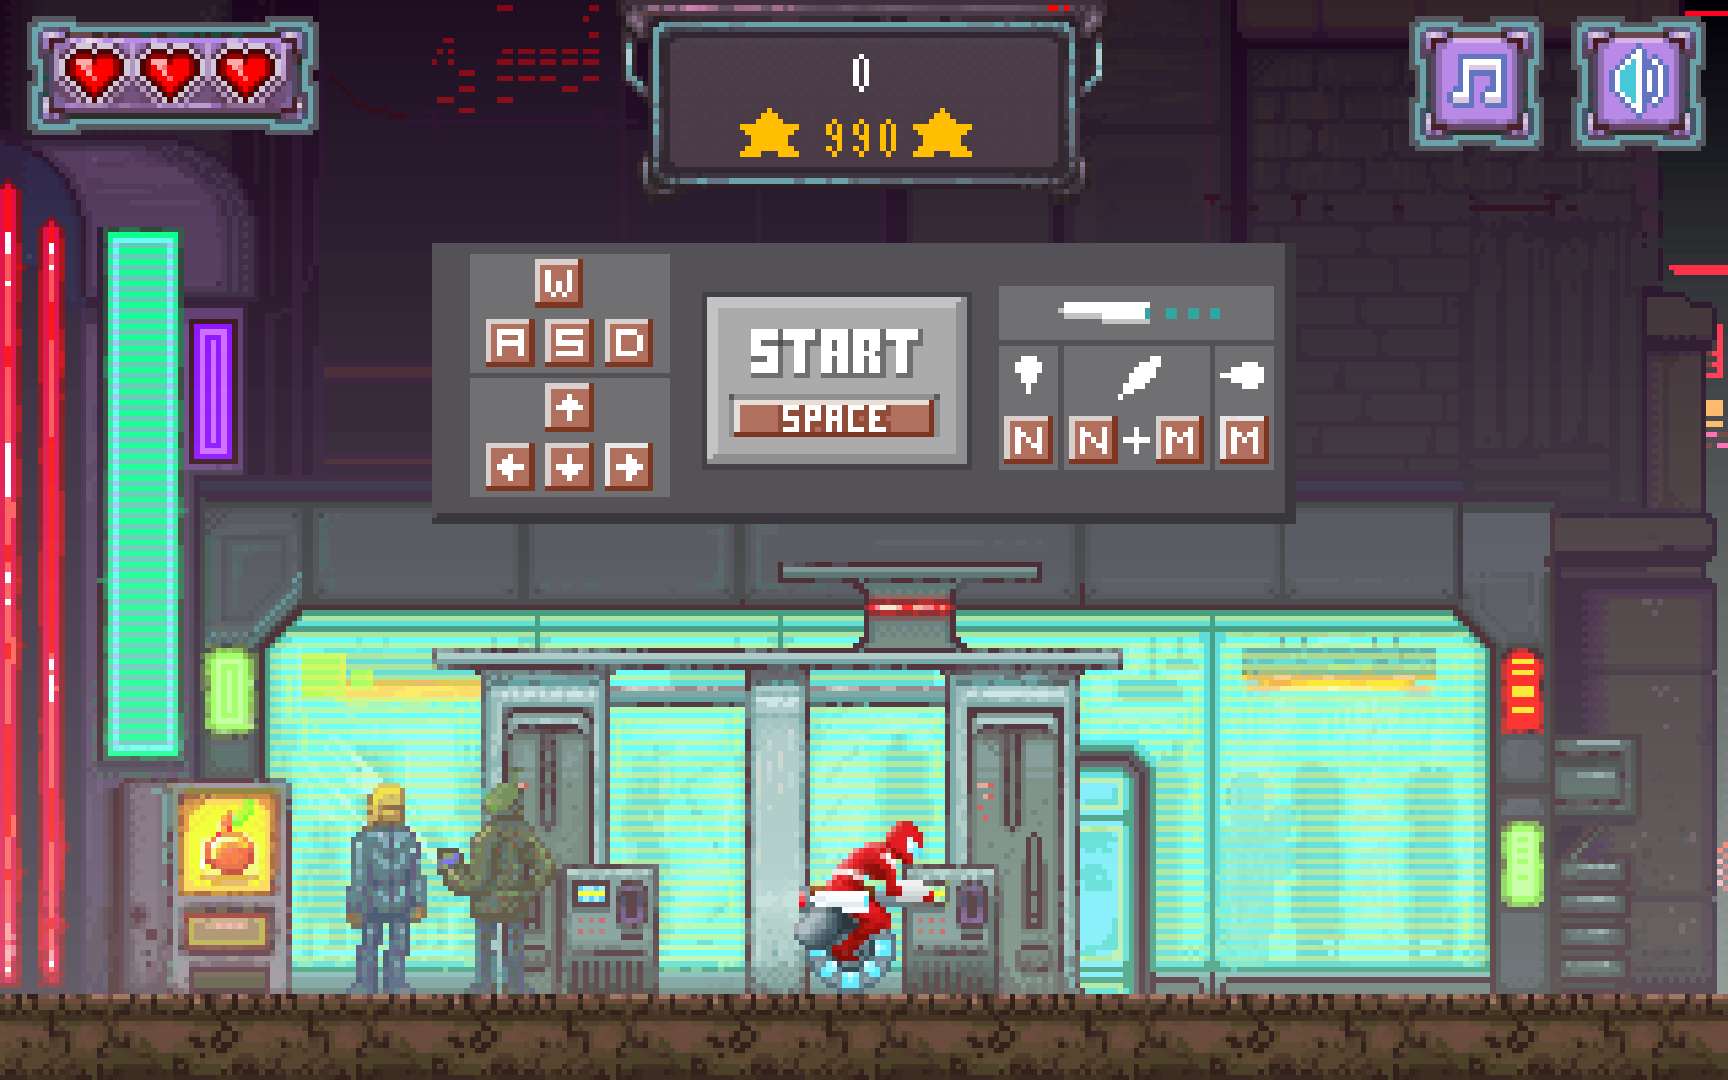 Screenshot of the game's start screen